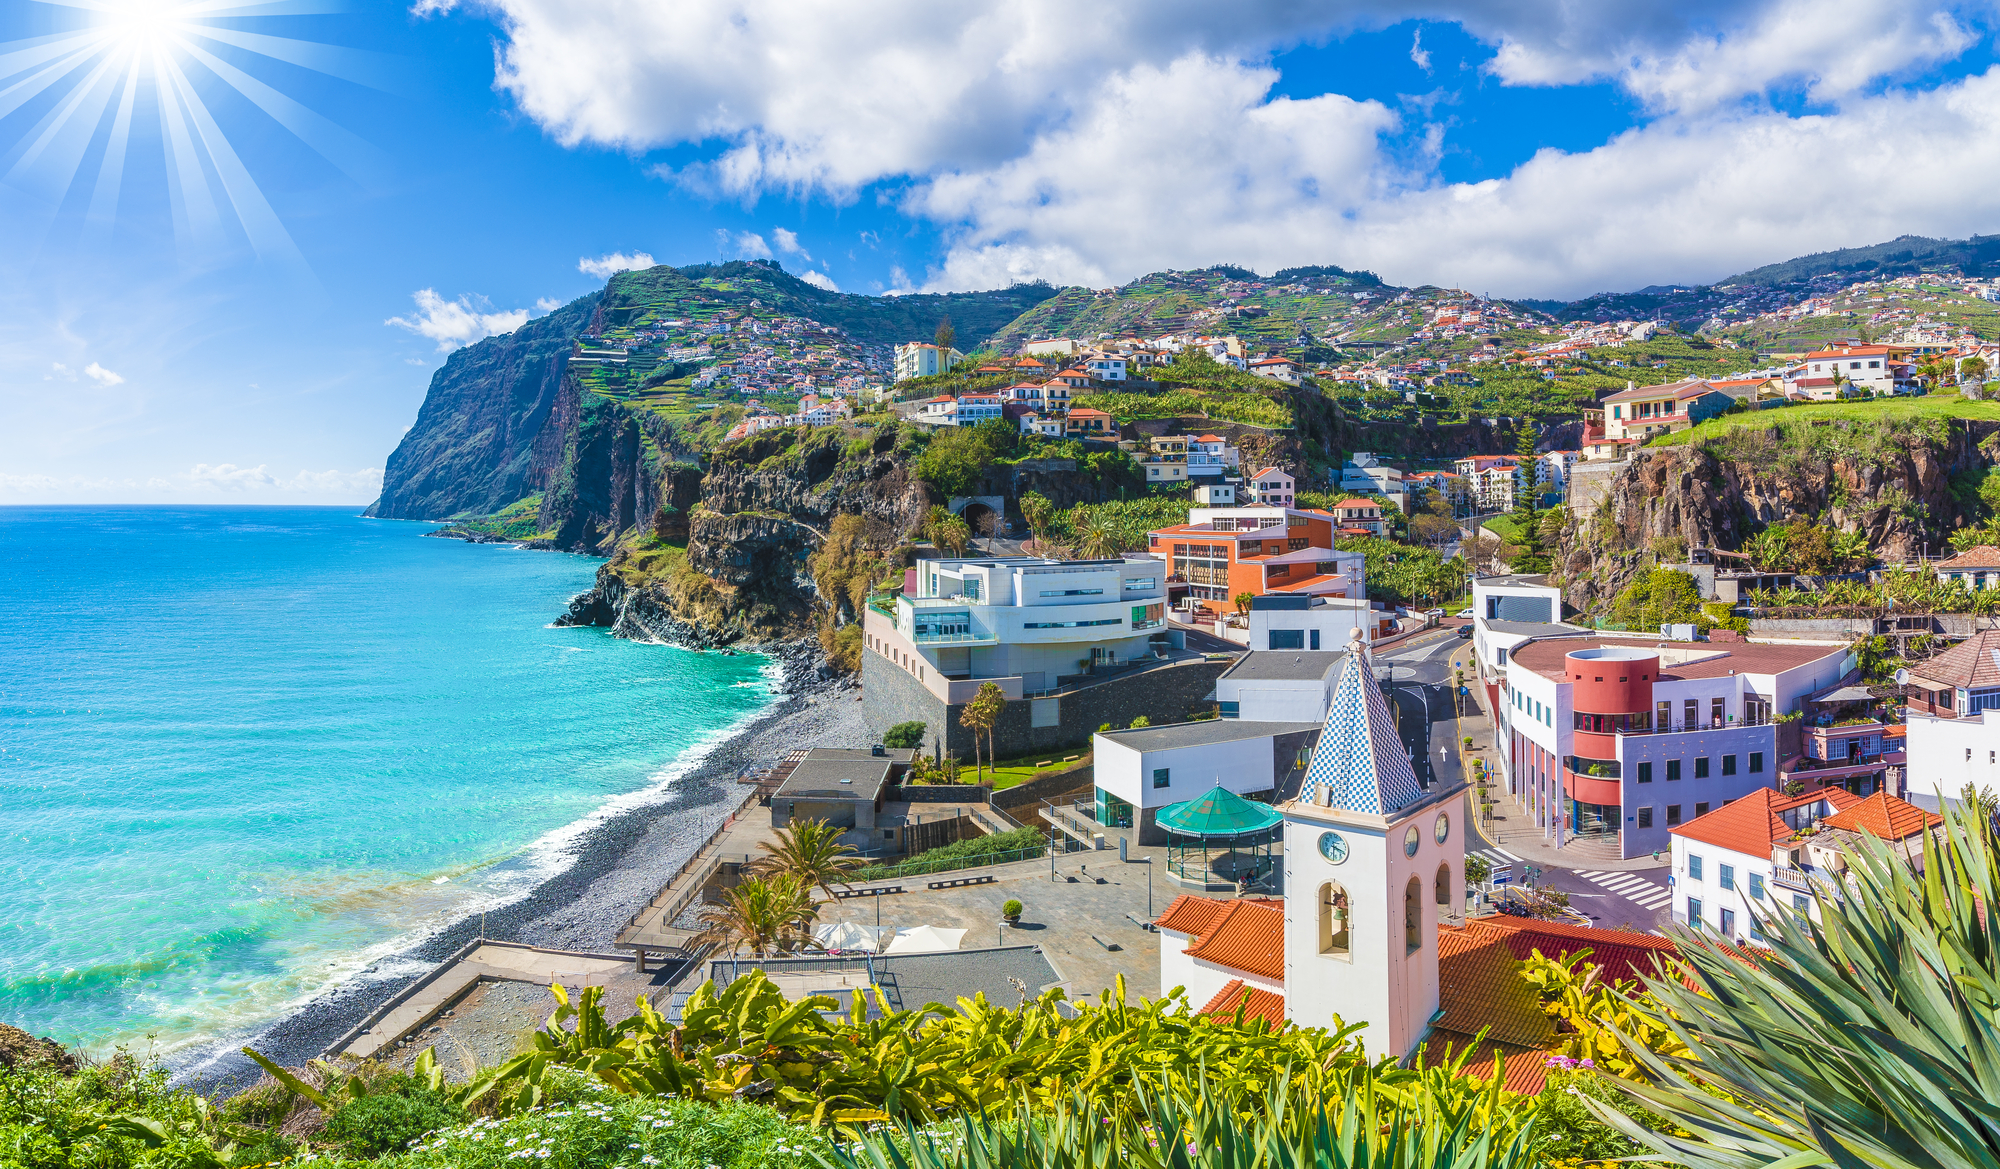 Quinta Splendida: A Botanical Oasis on Madeira Island